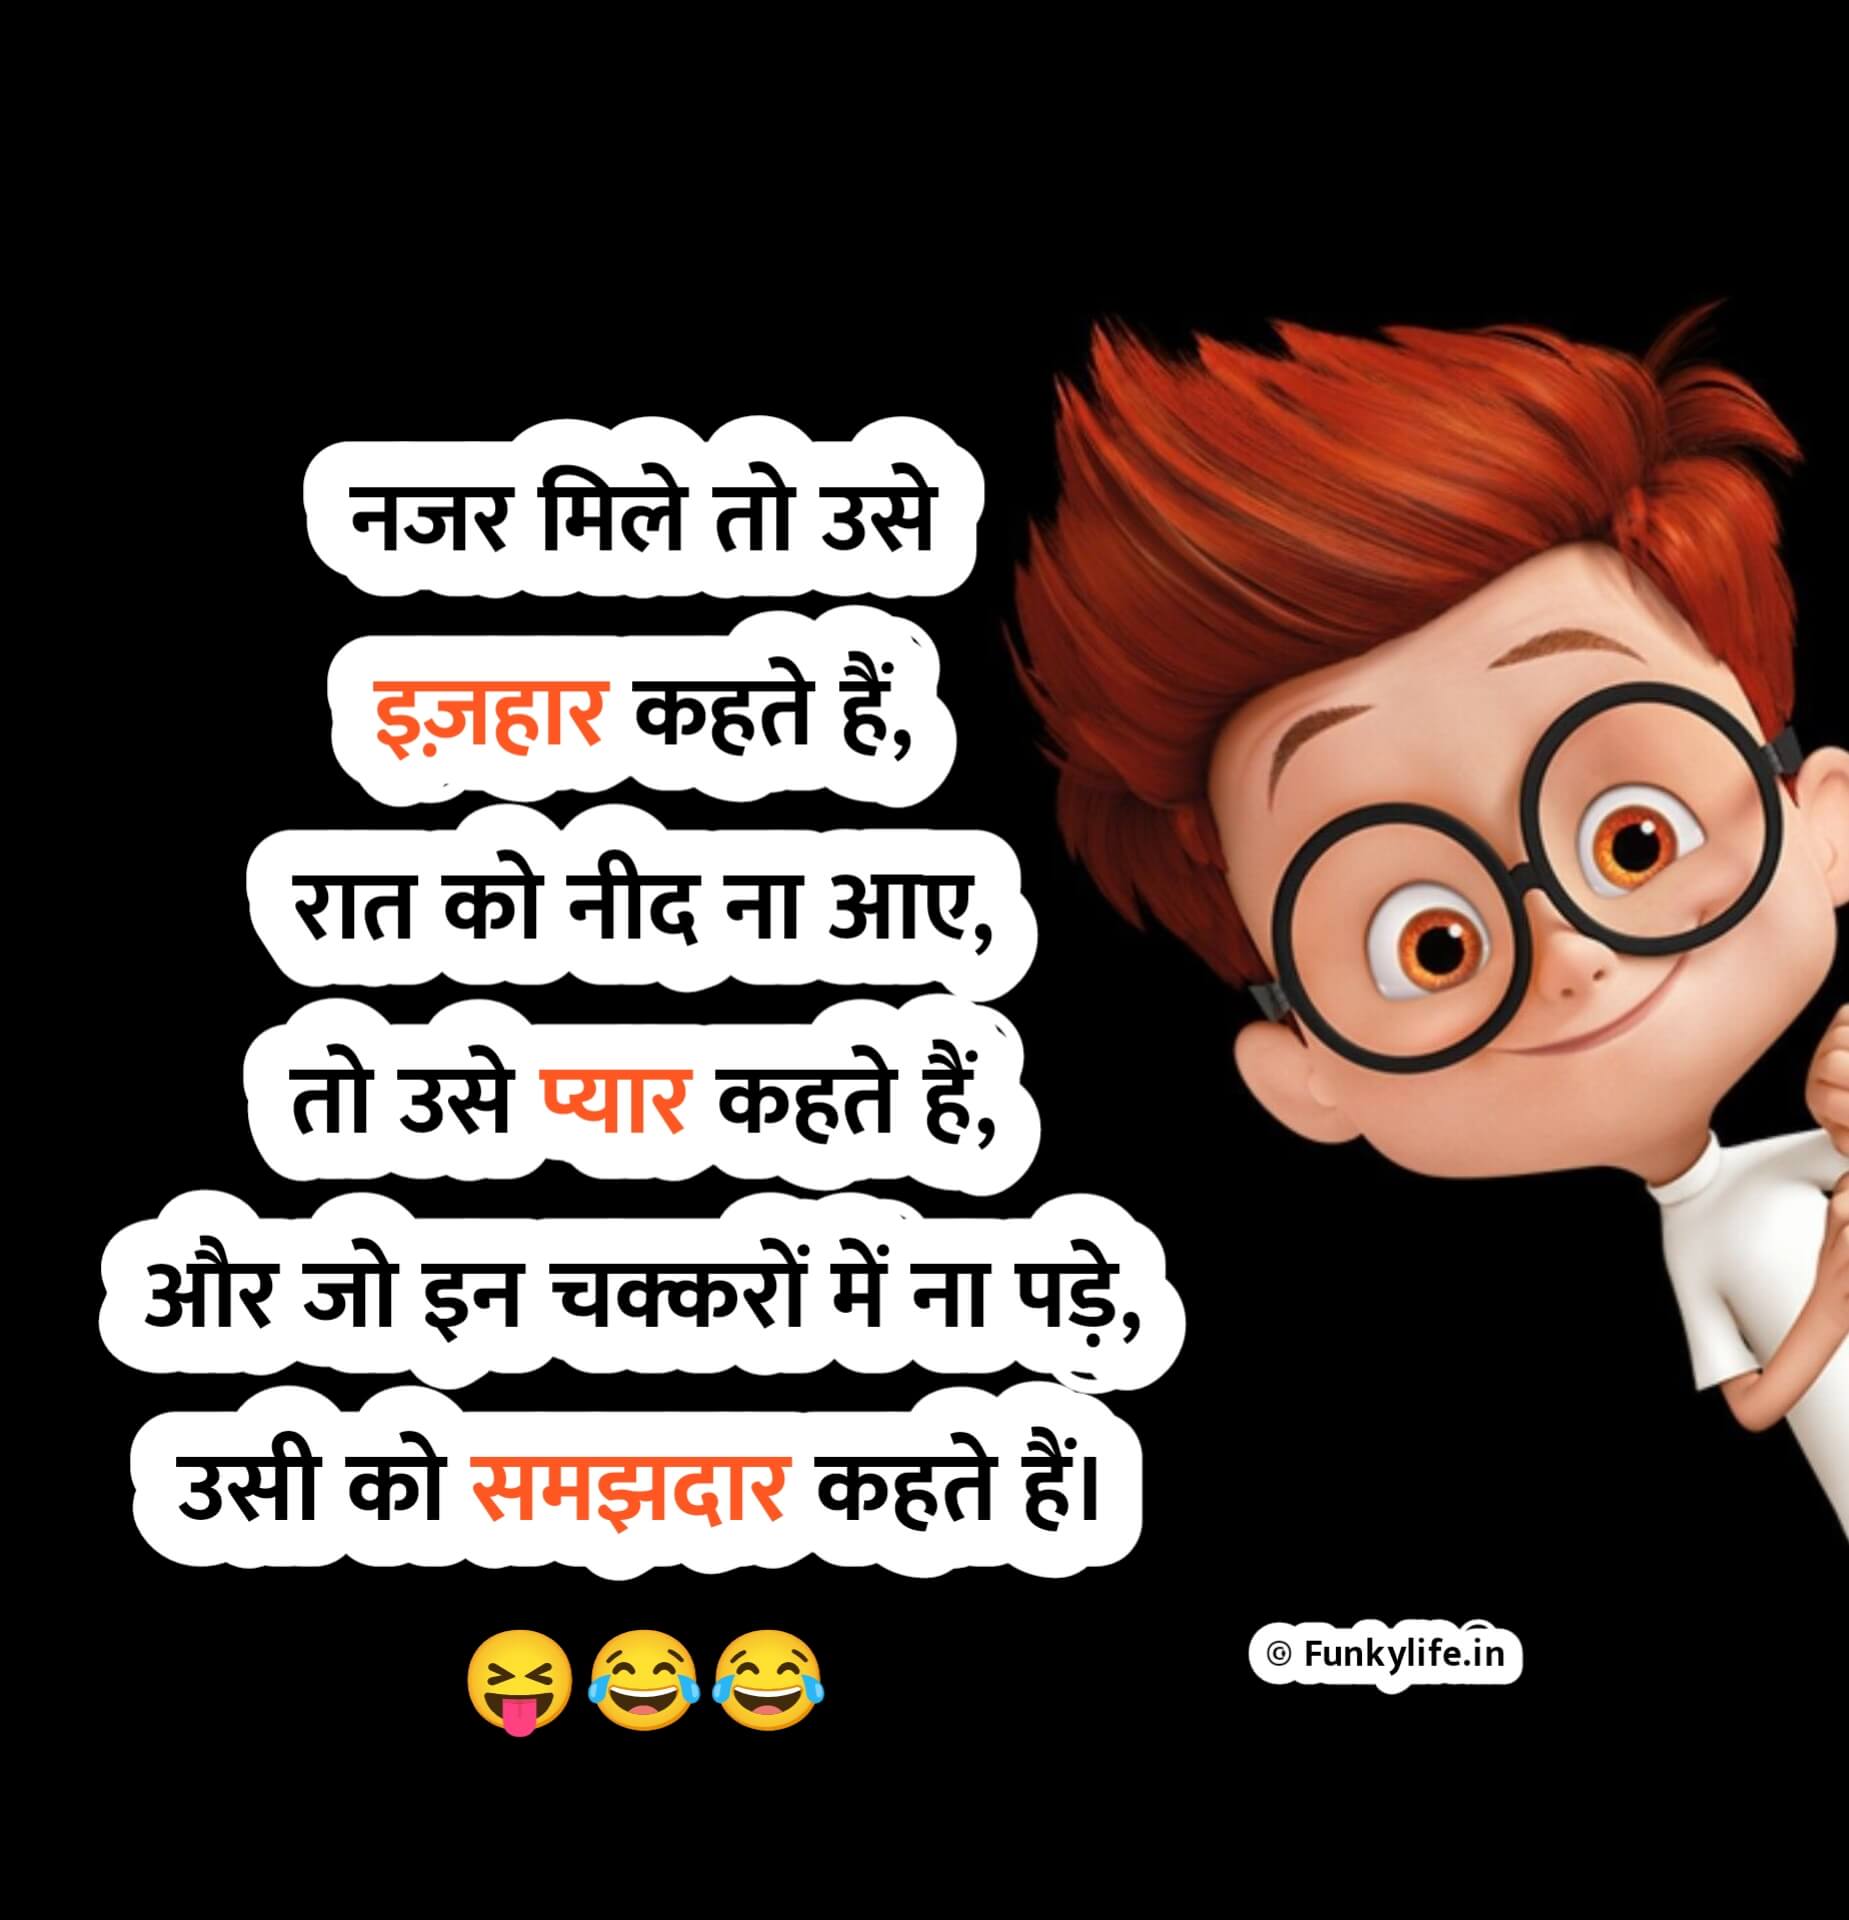 Hindi Funny Shayari for Life